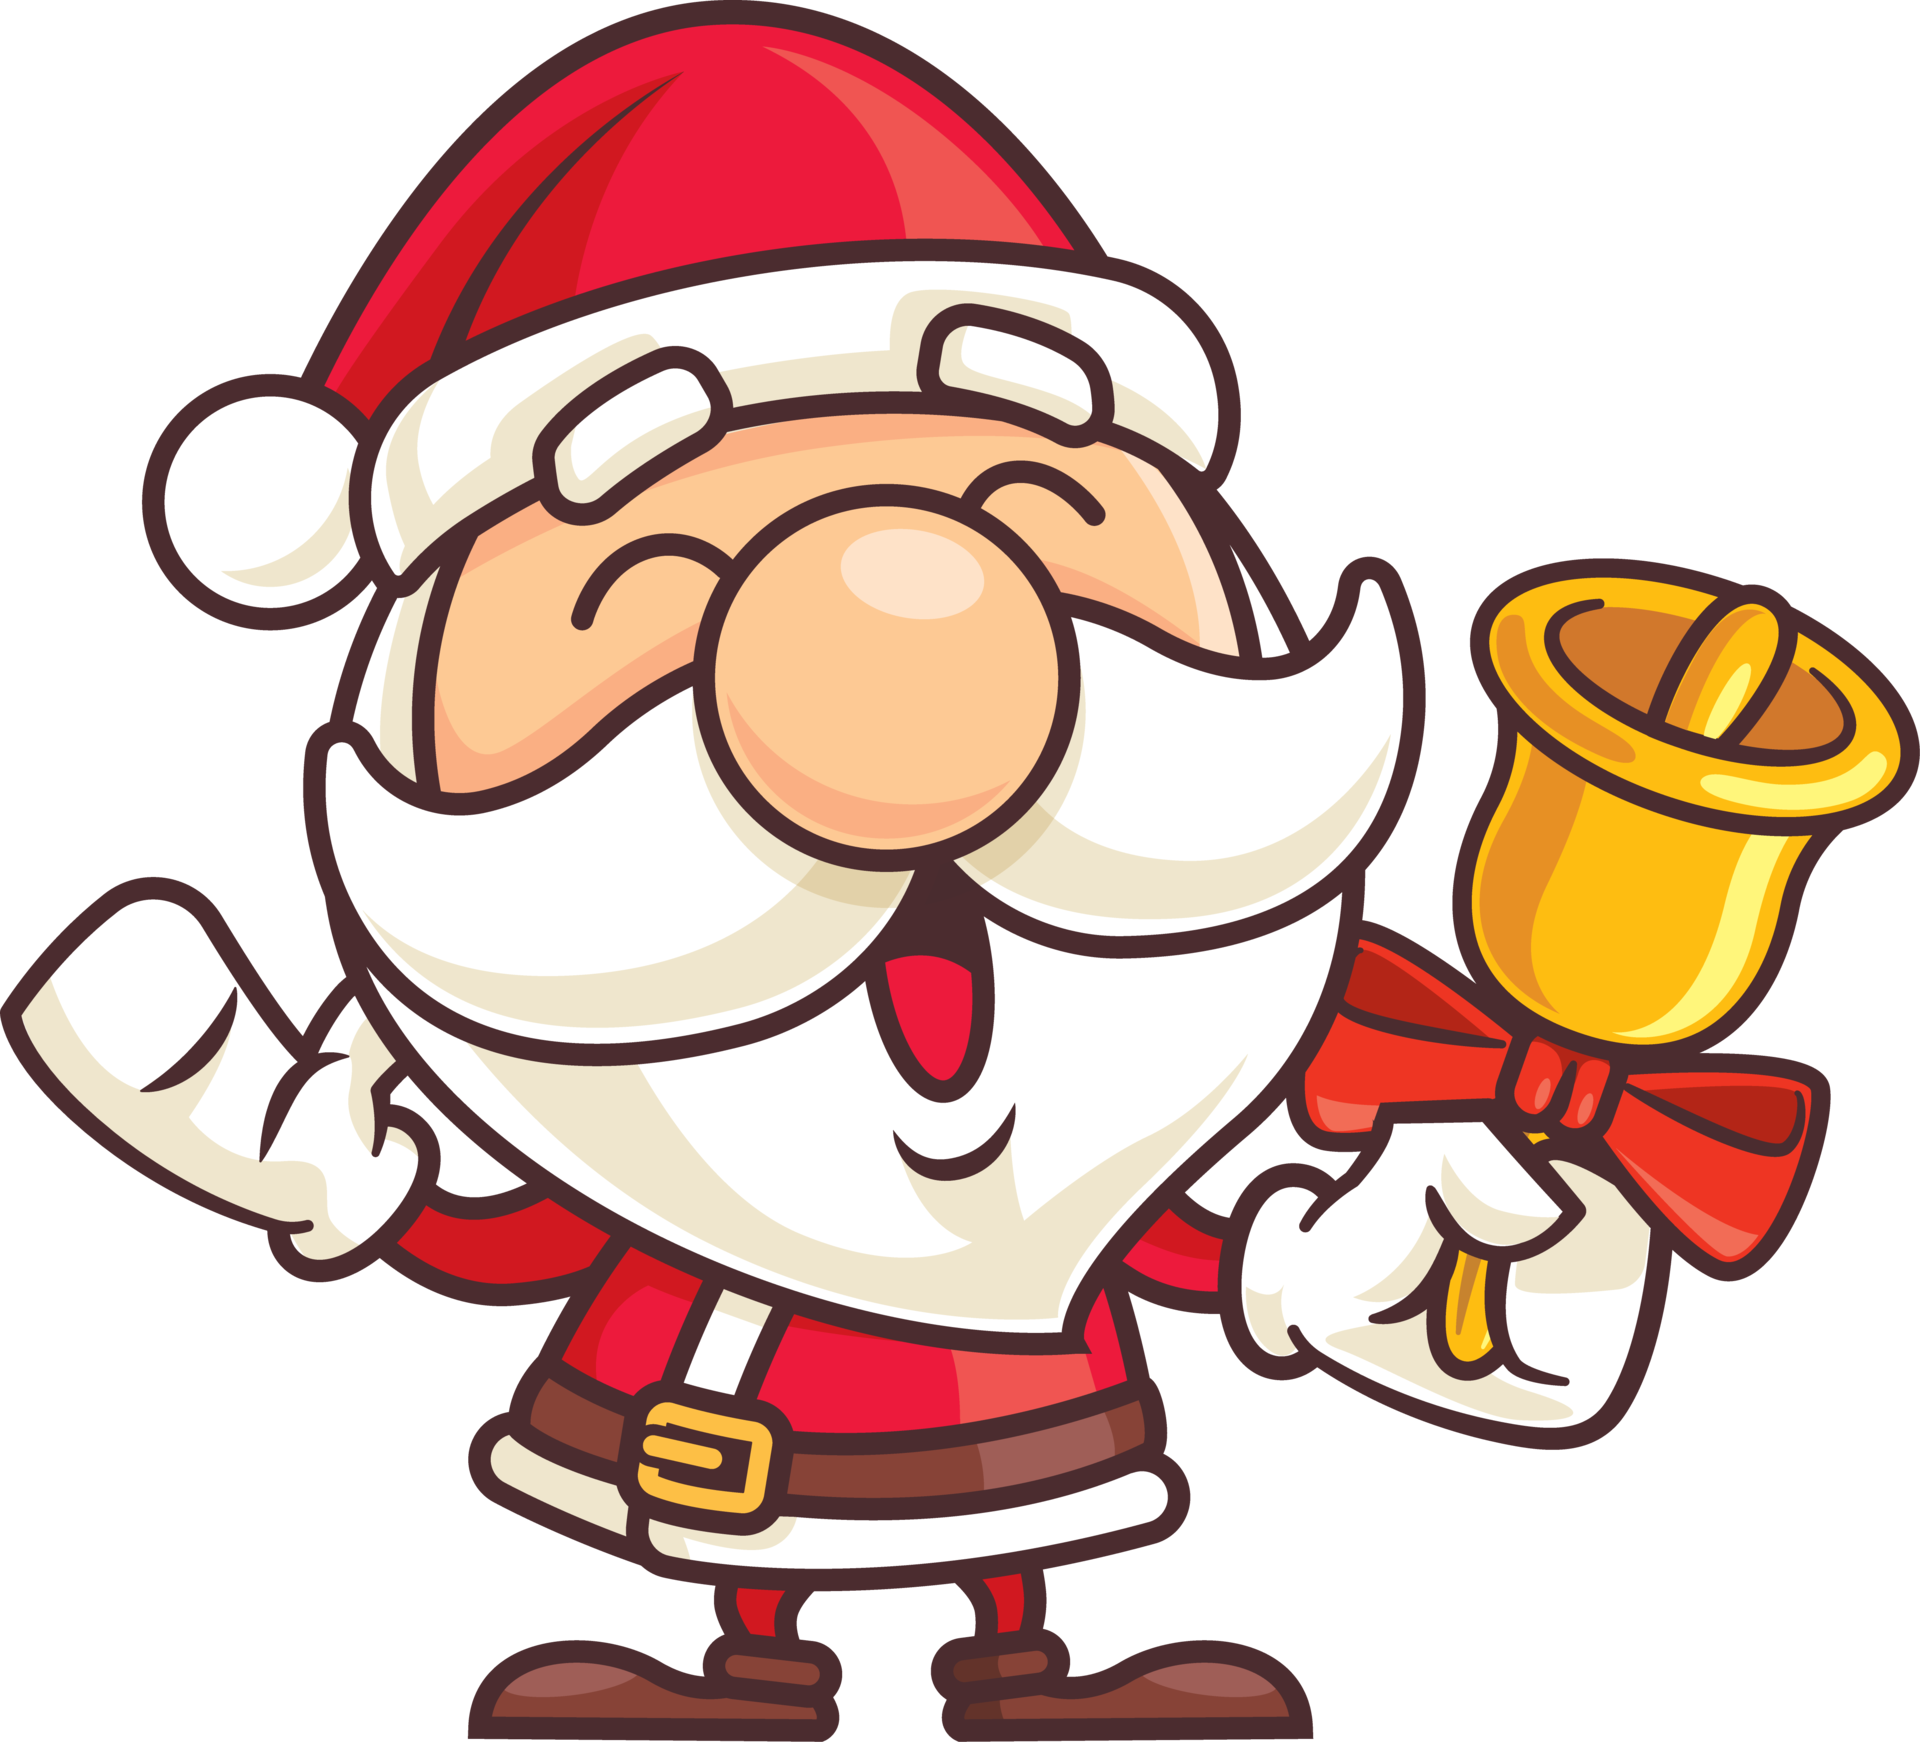 Merry Christmas with cartoon santa claus holding christmas jingle